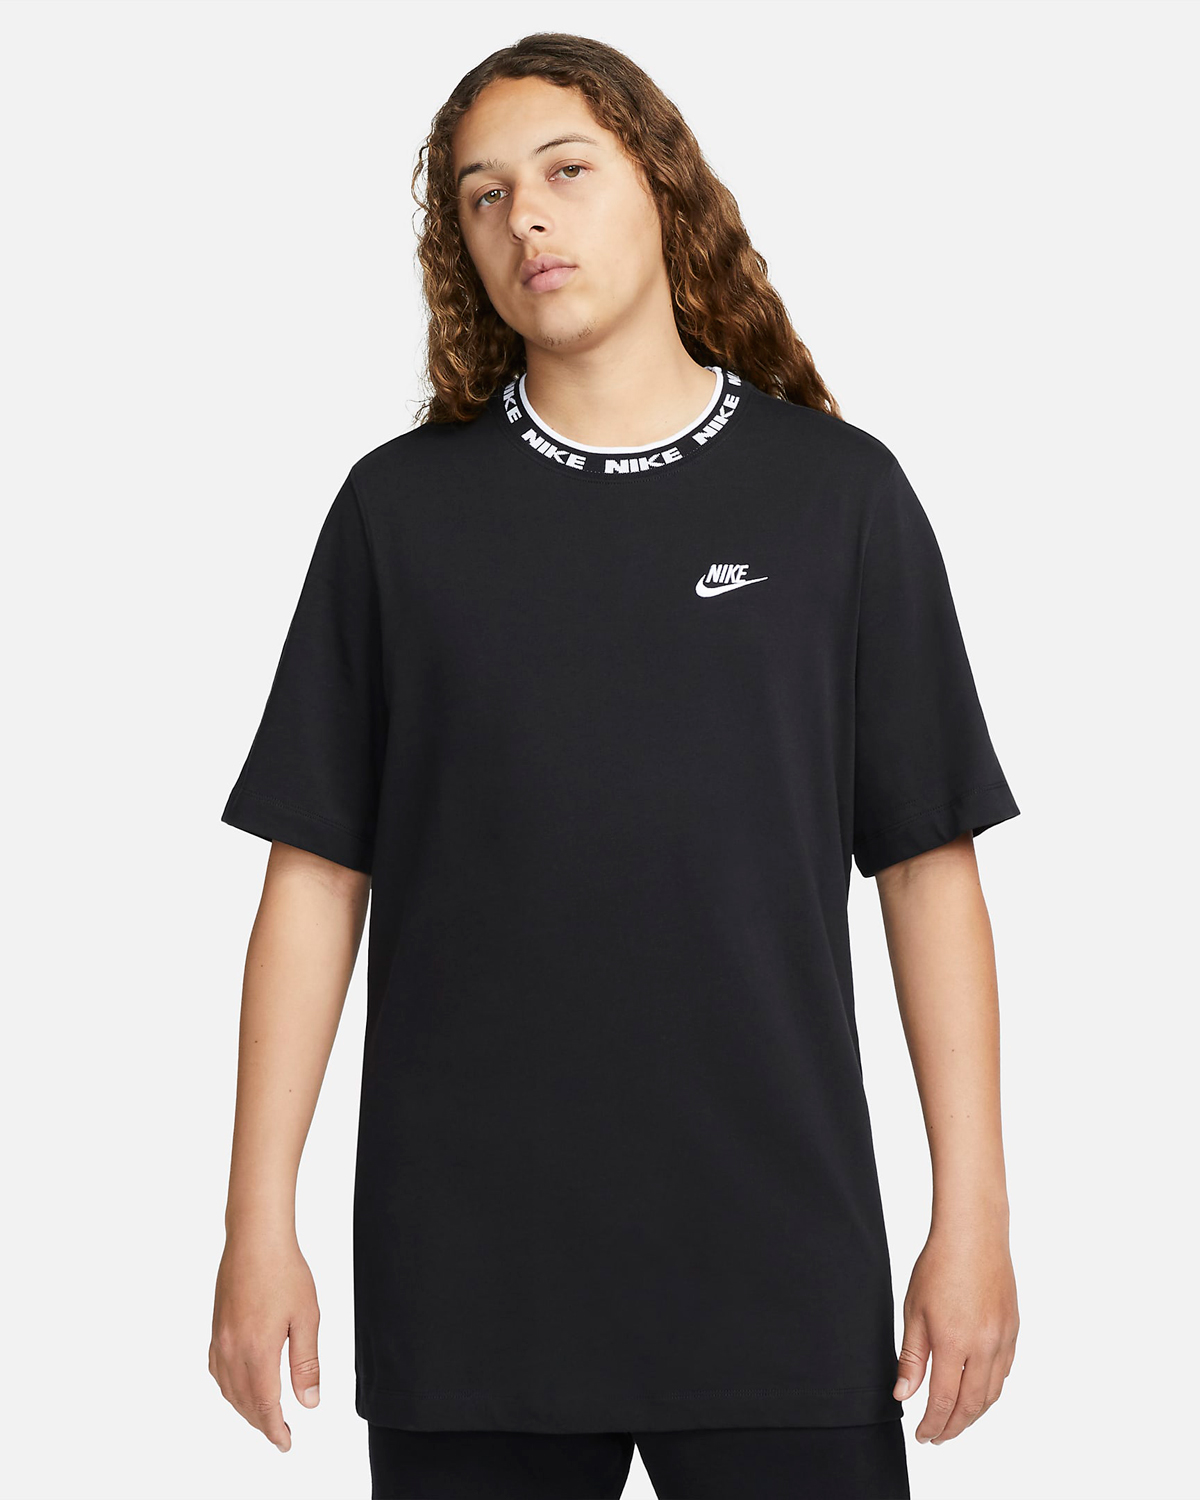 Nike-Sportswear-Club-Short-Sleeve-Top-Black-White-1